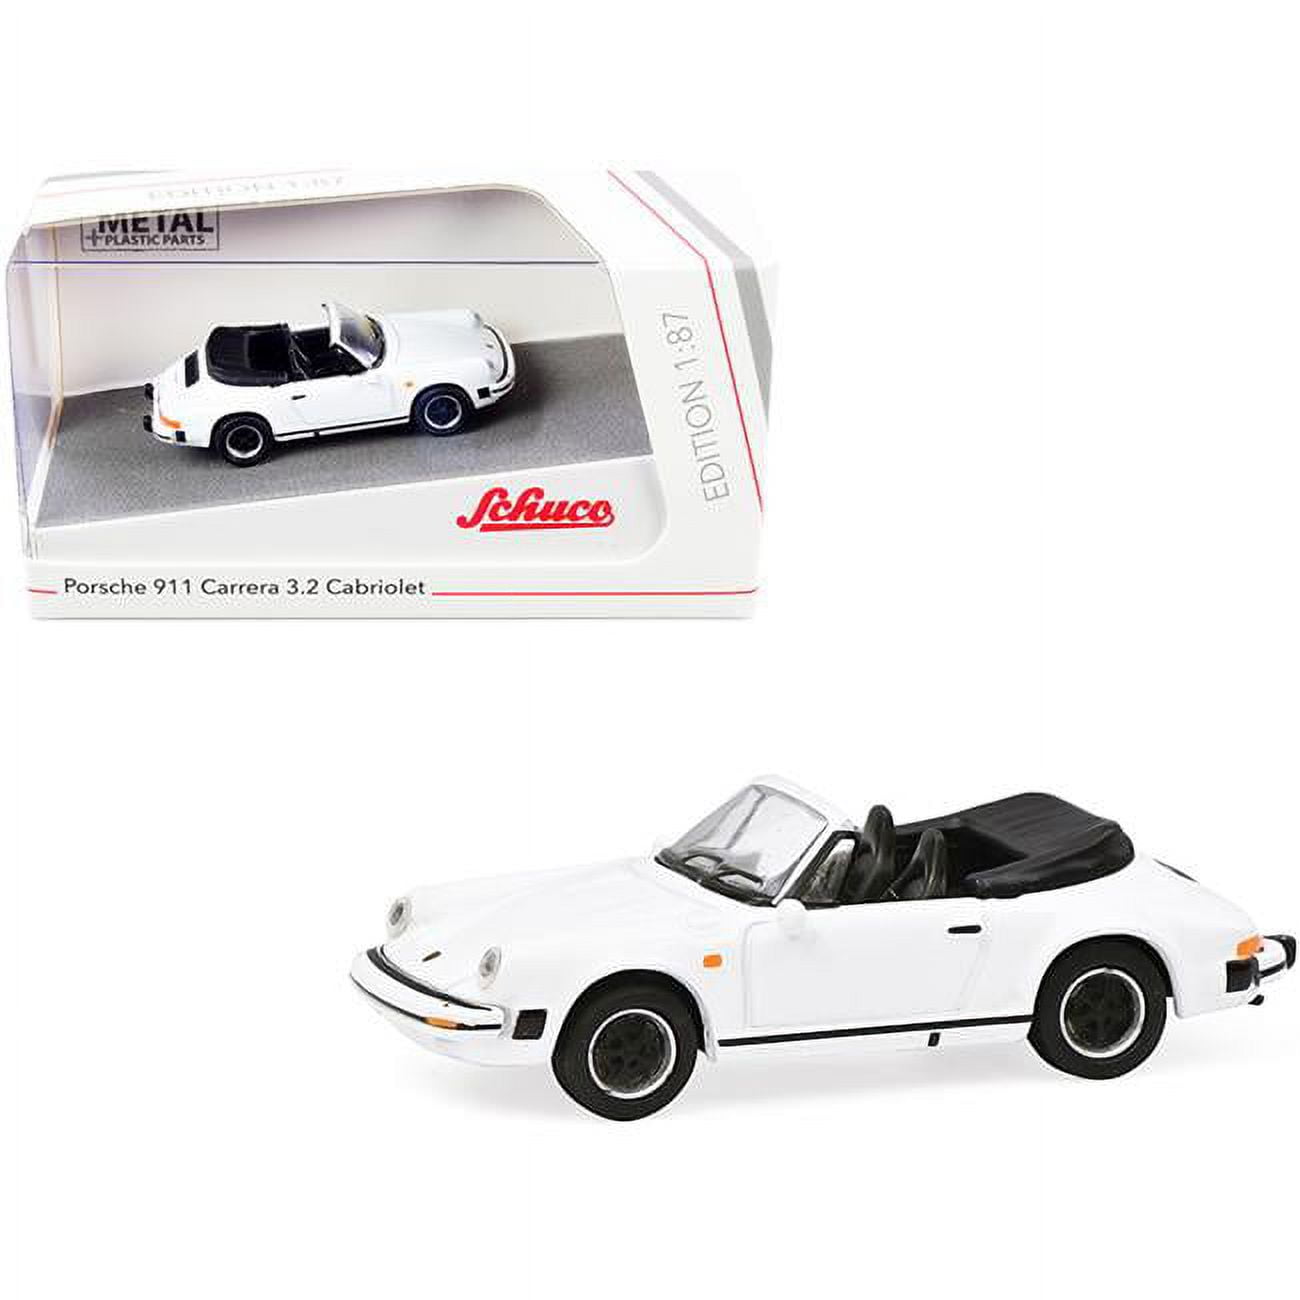 Picture of Schuco 452659800 1-87 HO Diecast Model Car for Porsche 911 Carrera 3.2 Cabriolet, White